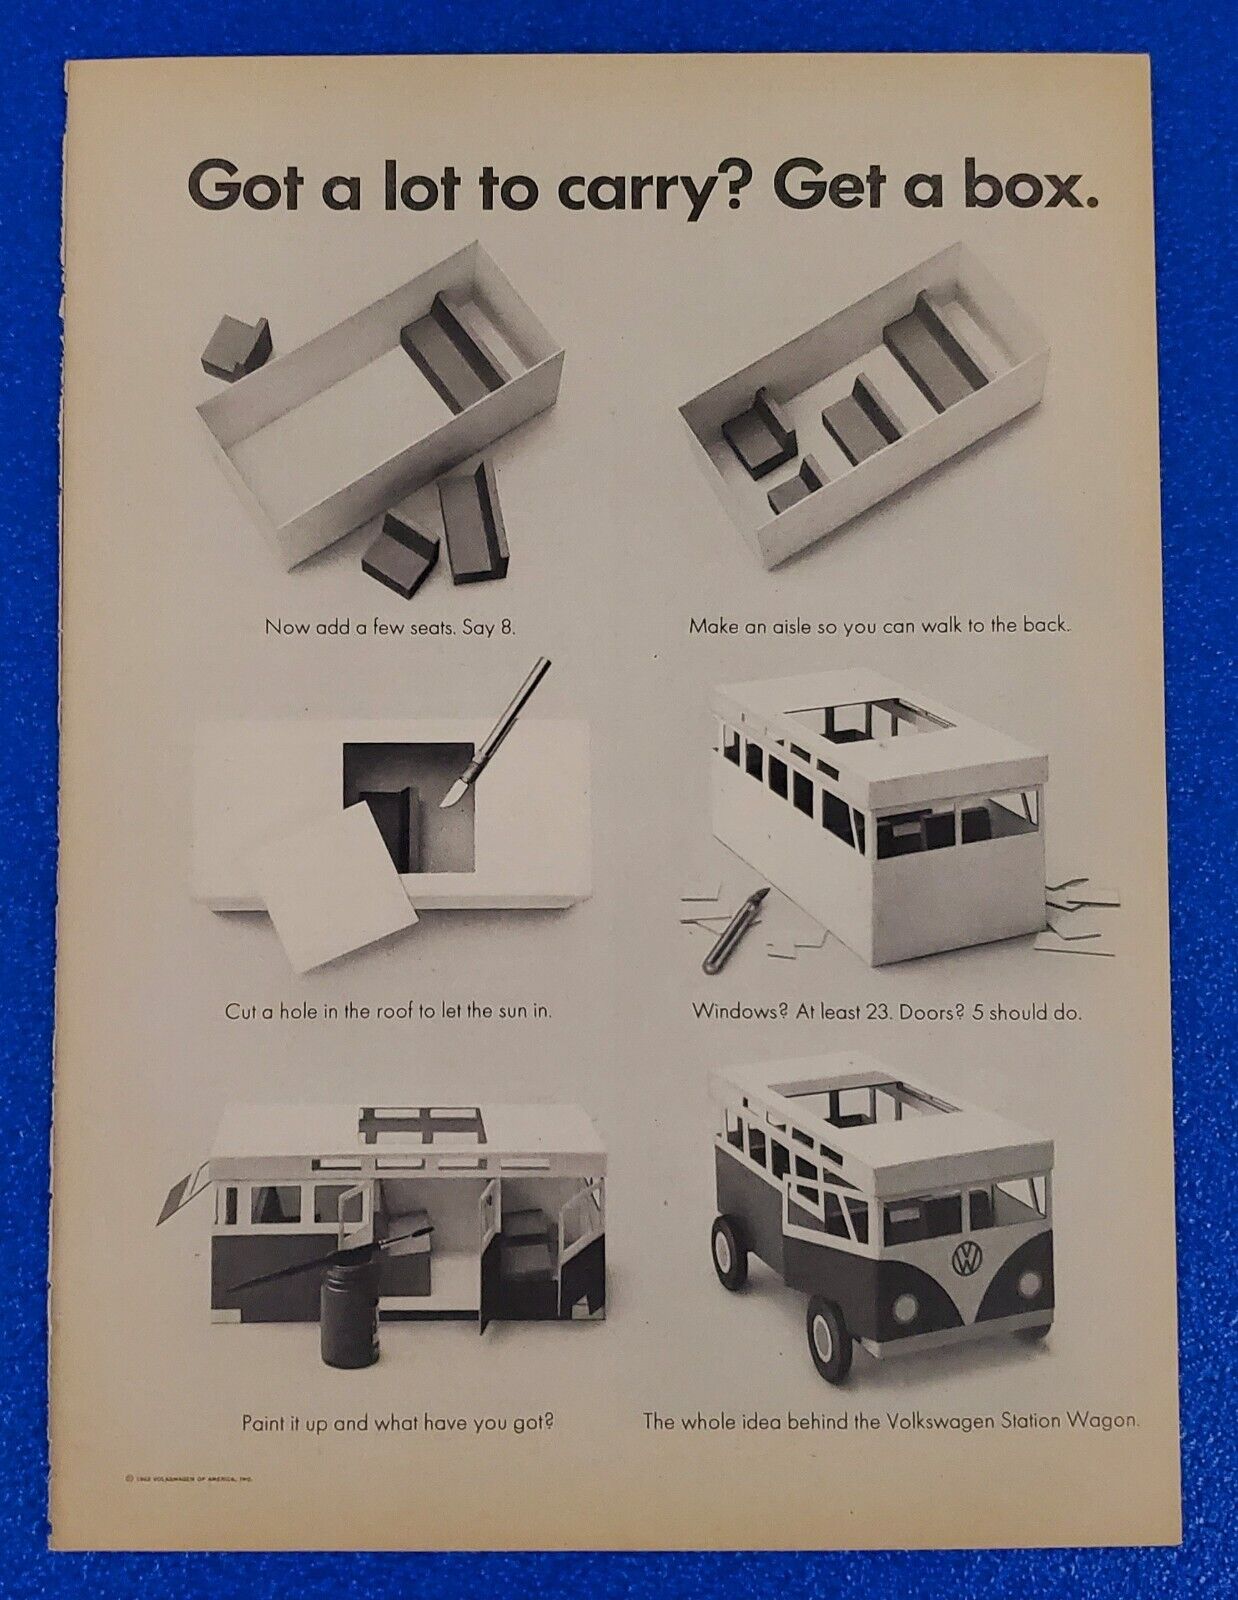 1962 VOLKSWAGEN BUS/STATION WAGON CLASSIC 21 WINDOW ORIGINAL PRINT AD GET A BOX